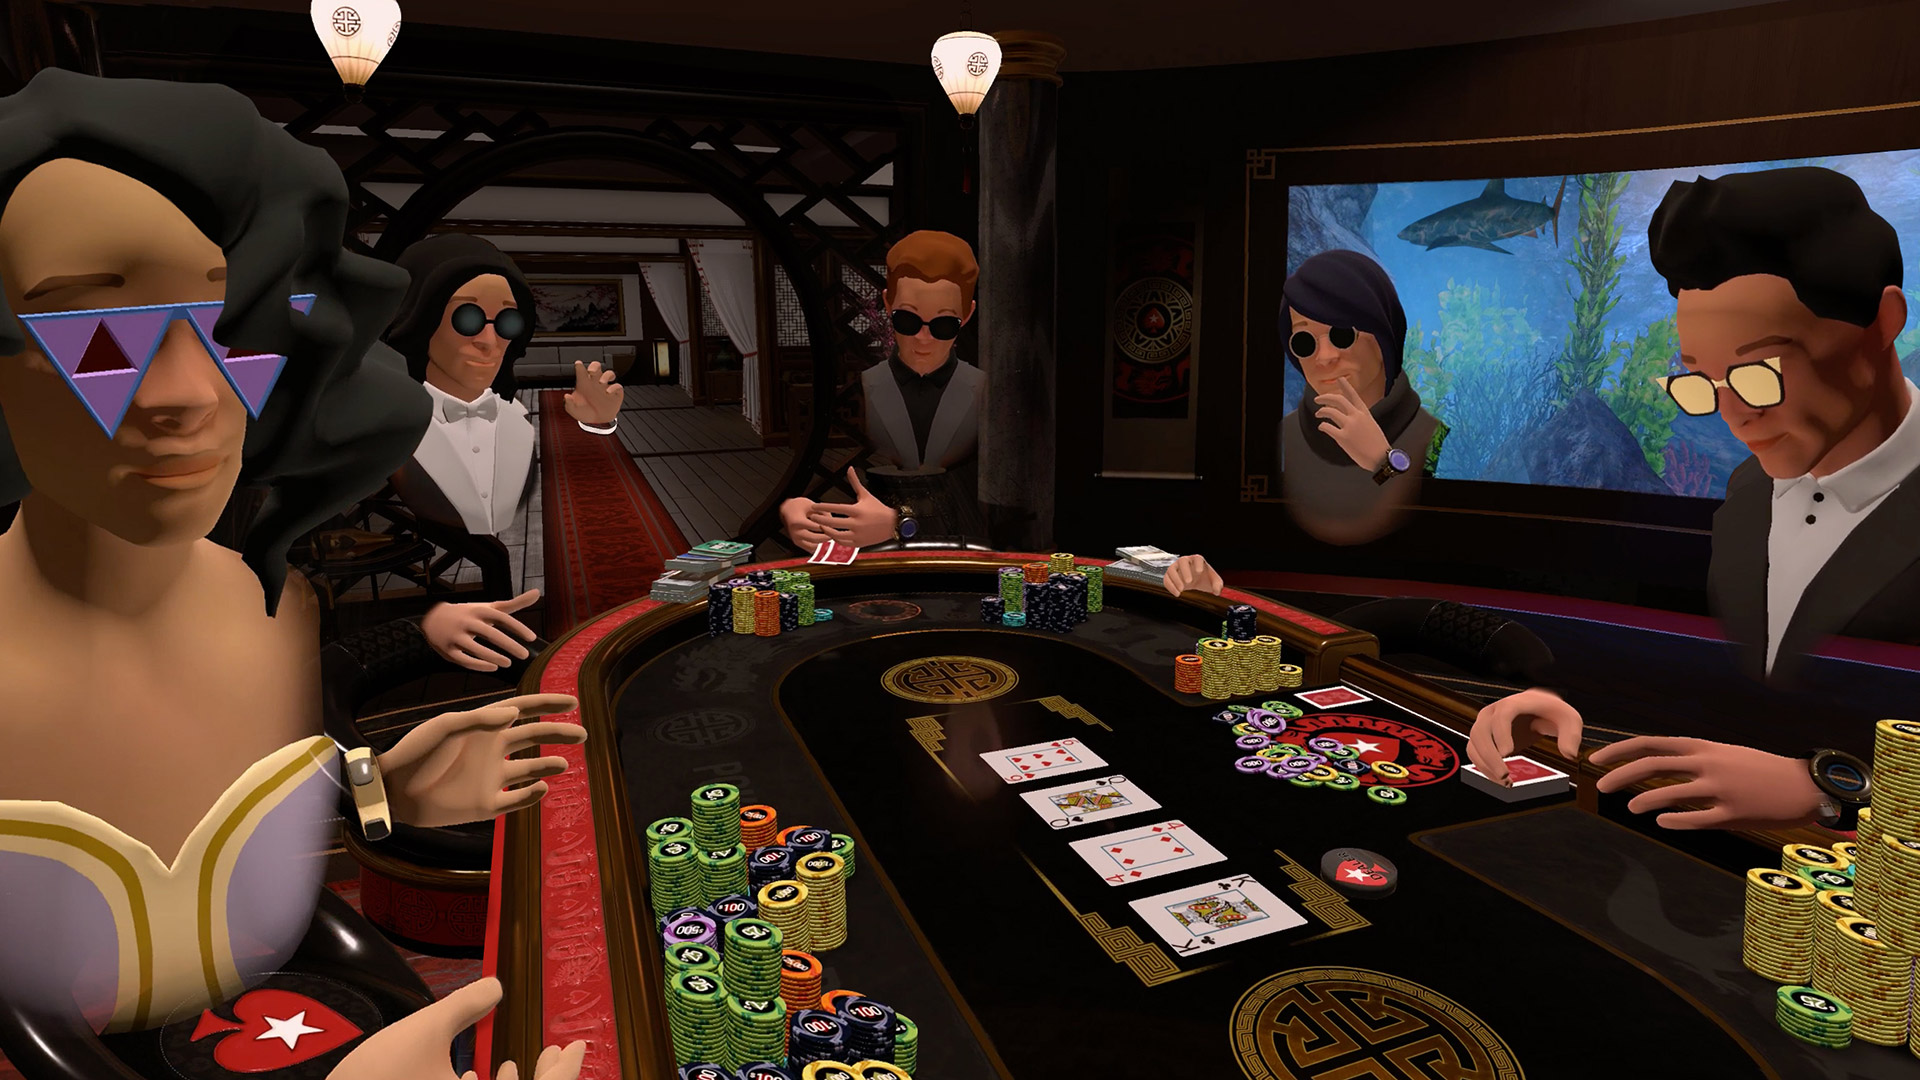 PokerStars VR on Steam